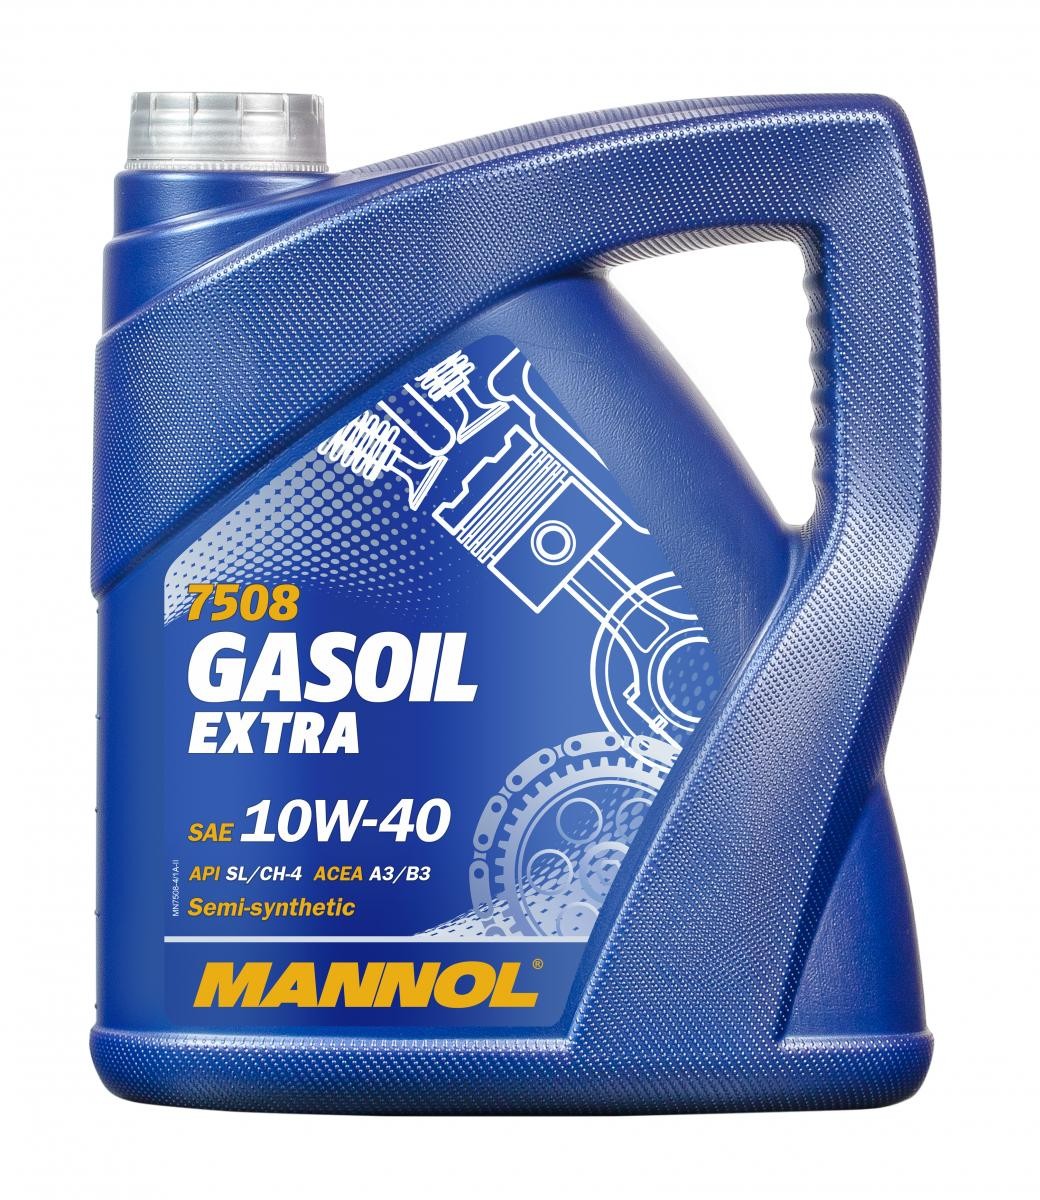 MN7508-4 MANNOL GASOIL EXTRA 10W-40, 4l, Teilsynthetiköl Motoröl MN7508-4 günstig kaufen